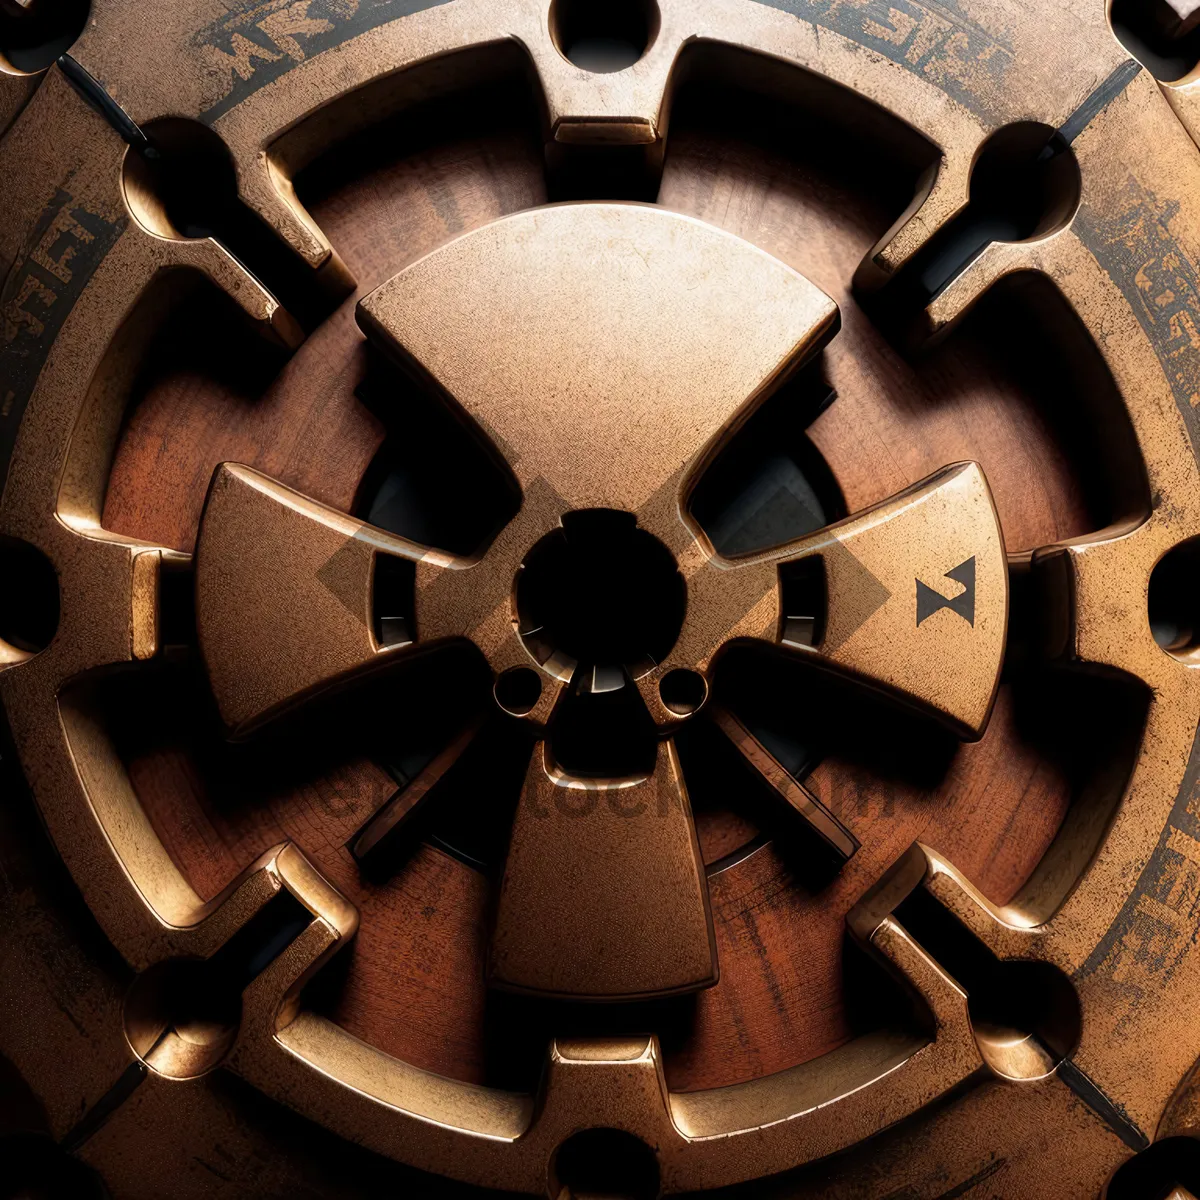 Picture of Vintage Gearwheel on Rusty Machine